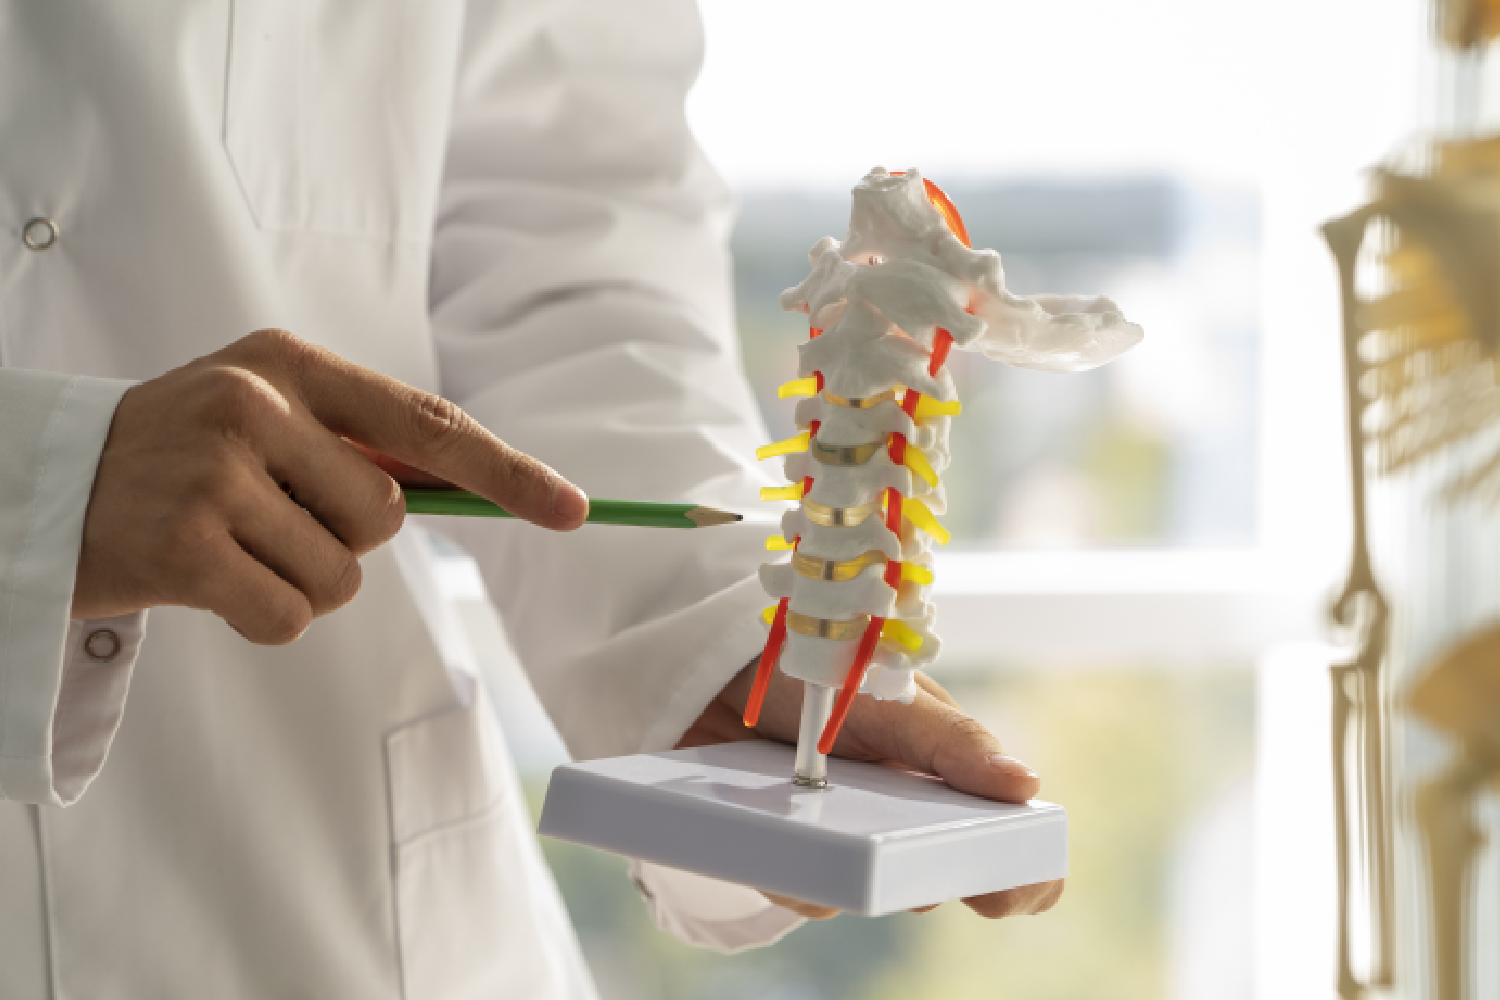 Can bone fracture heal itself?